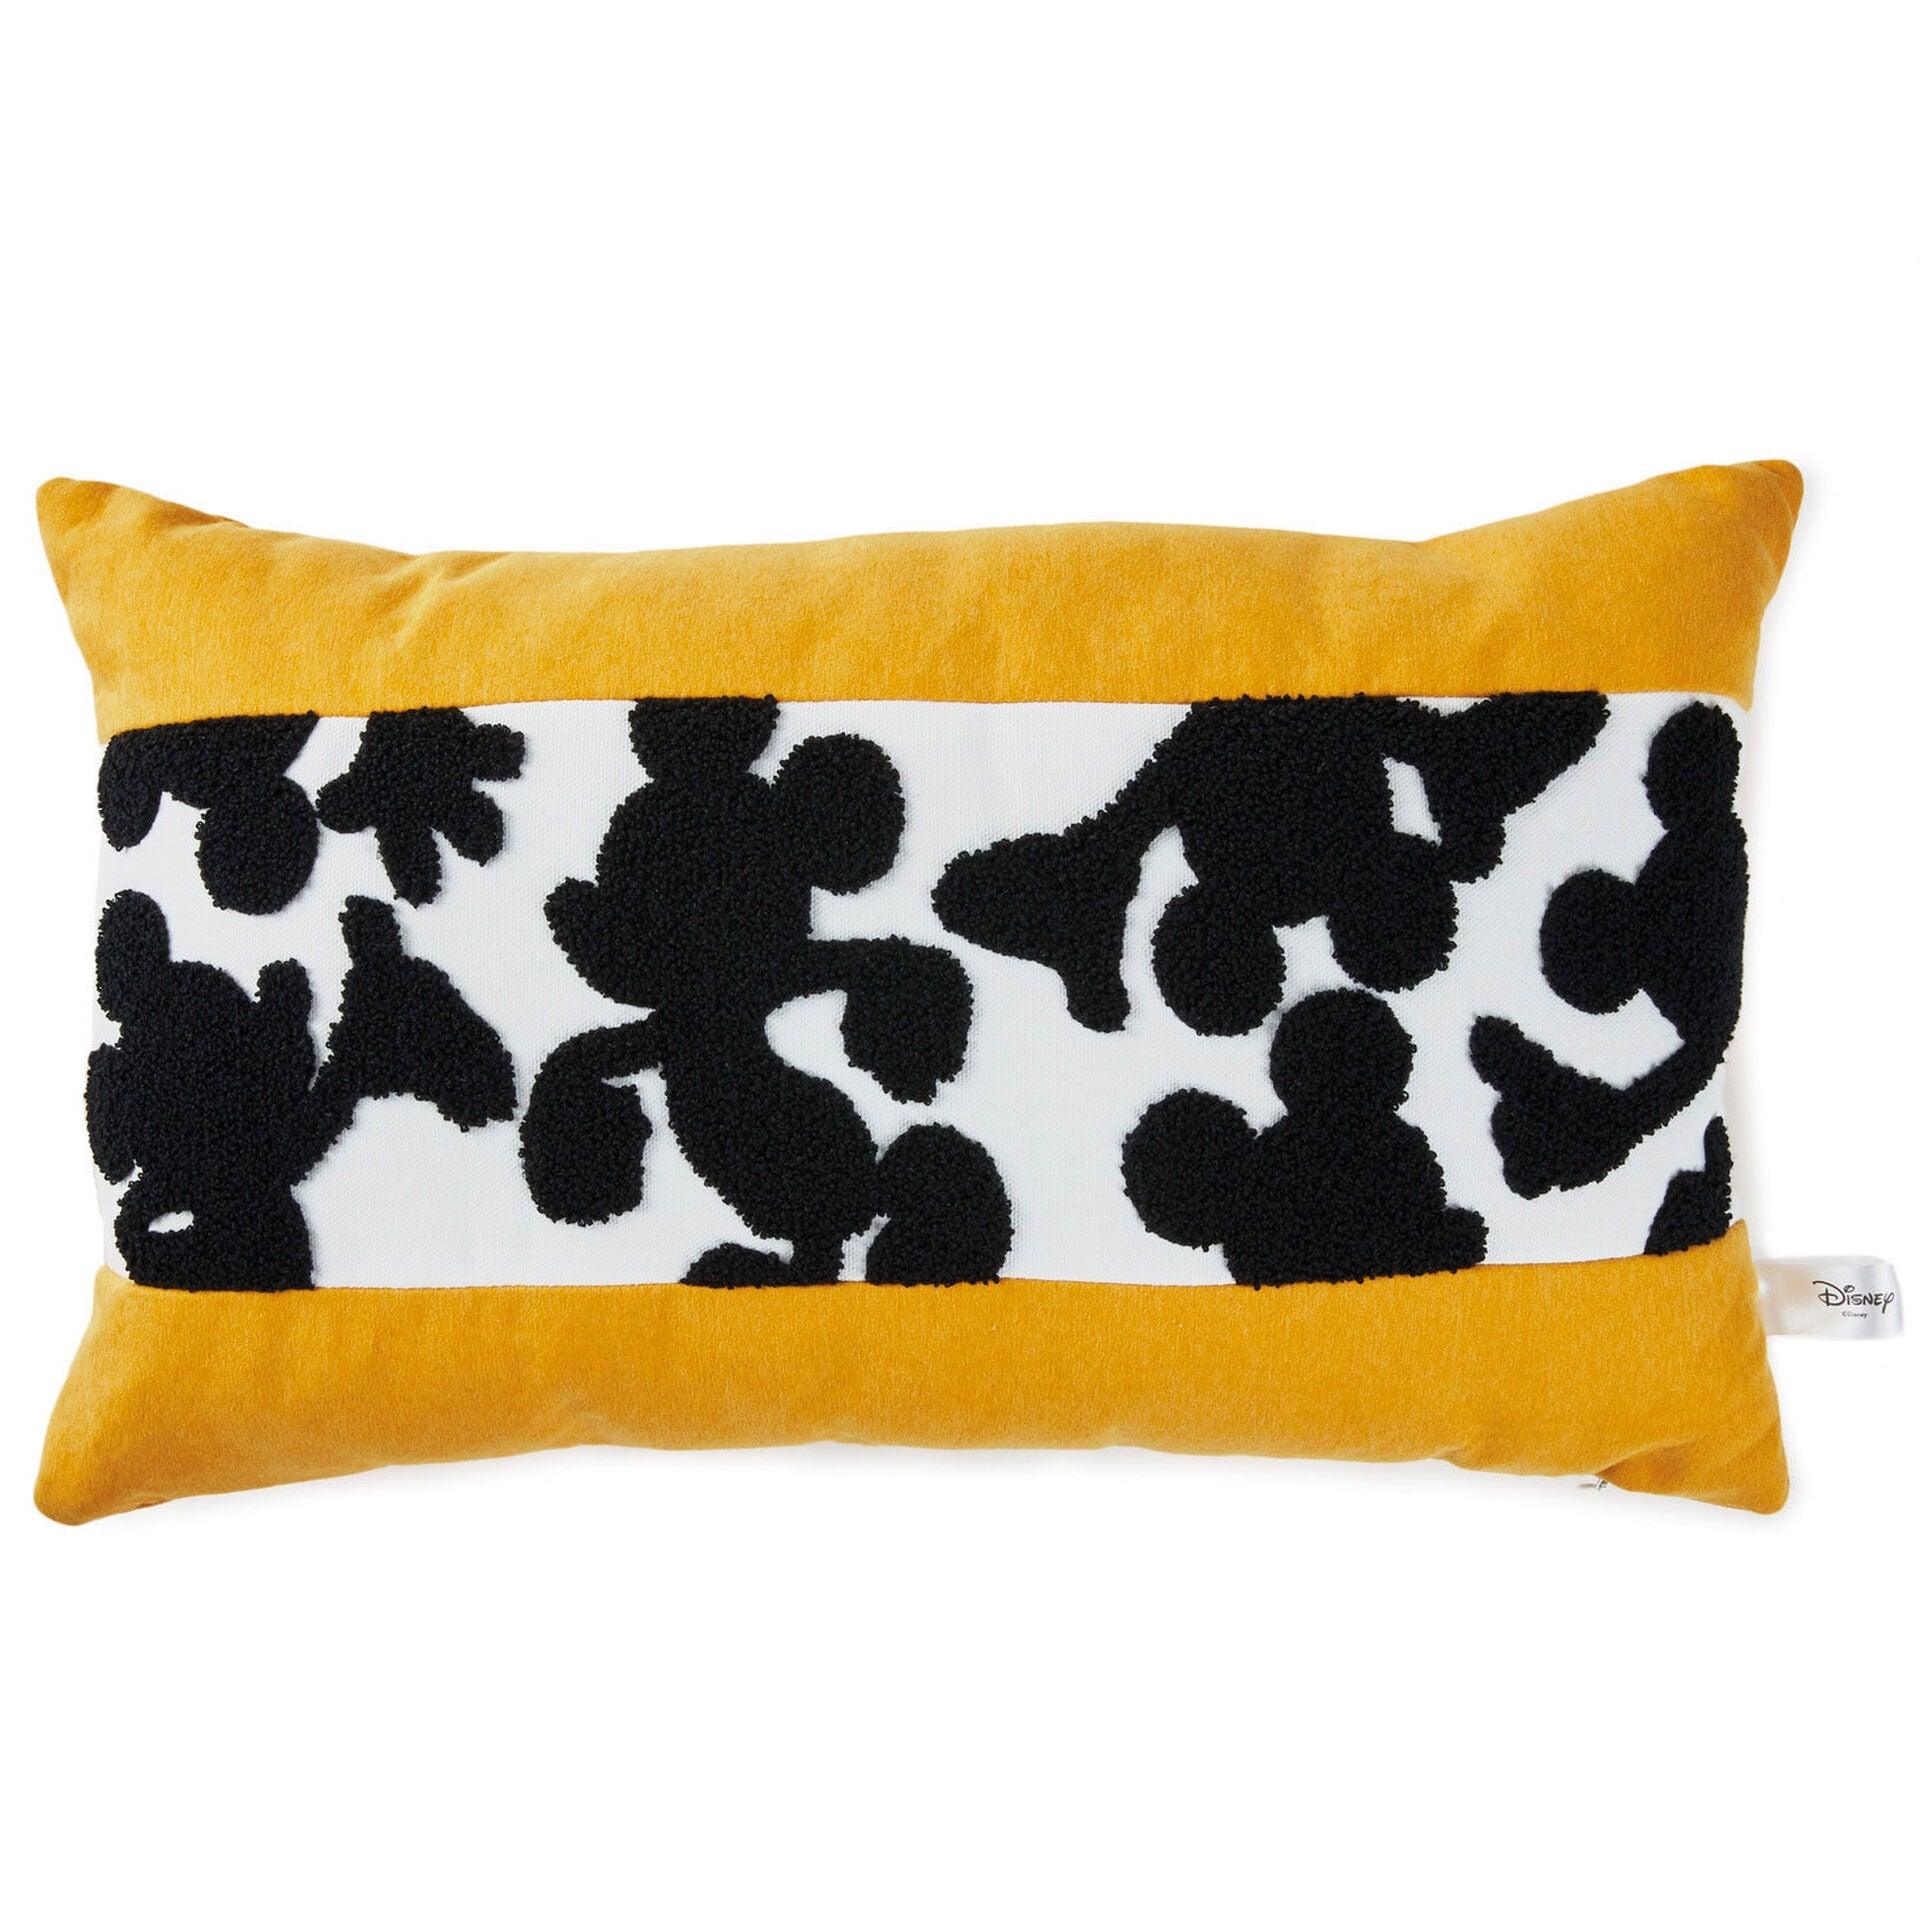 Disney Mickey Mouse Silhouettes Lumbar Throw Pillow, 18x9